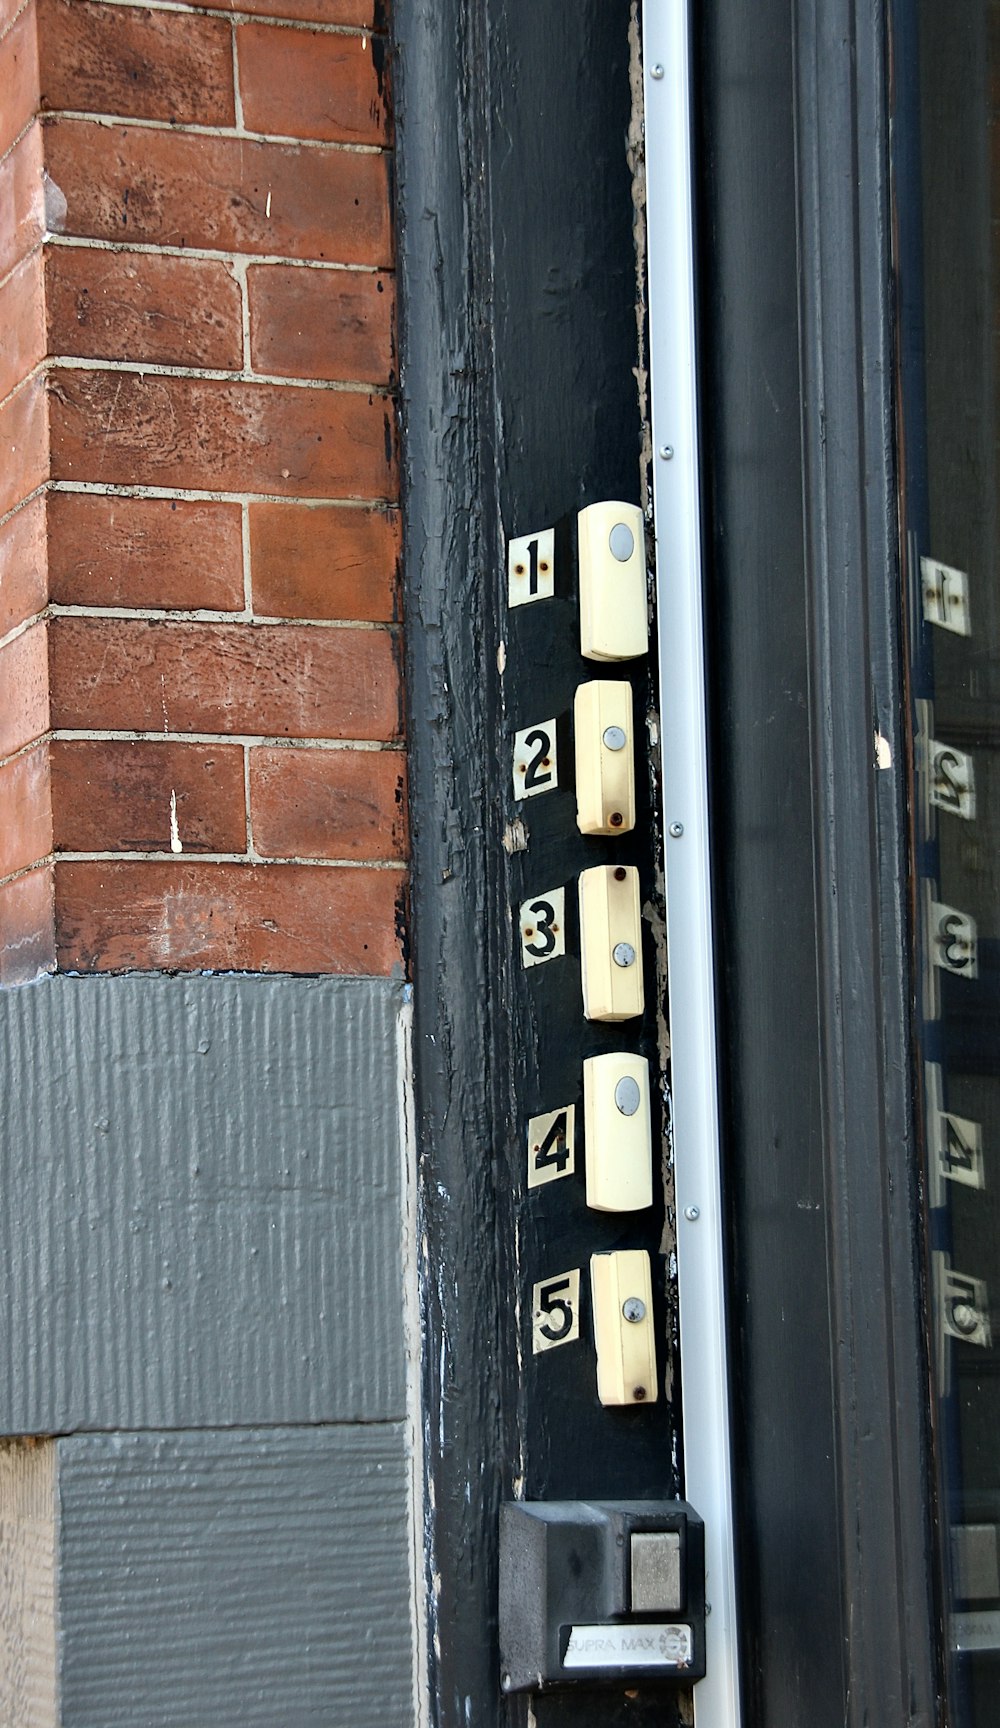 a close up of a door handle on a brick building